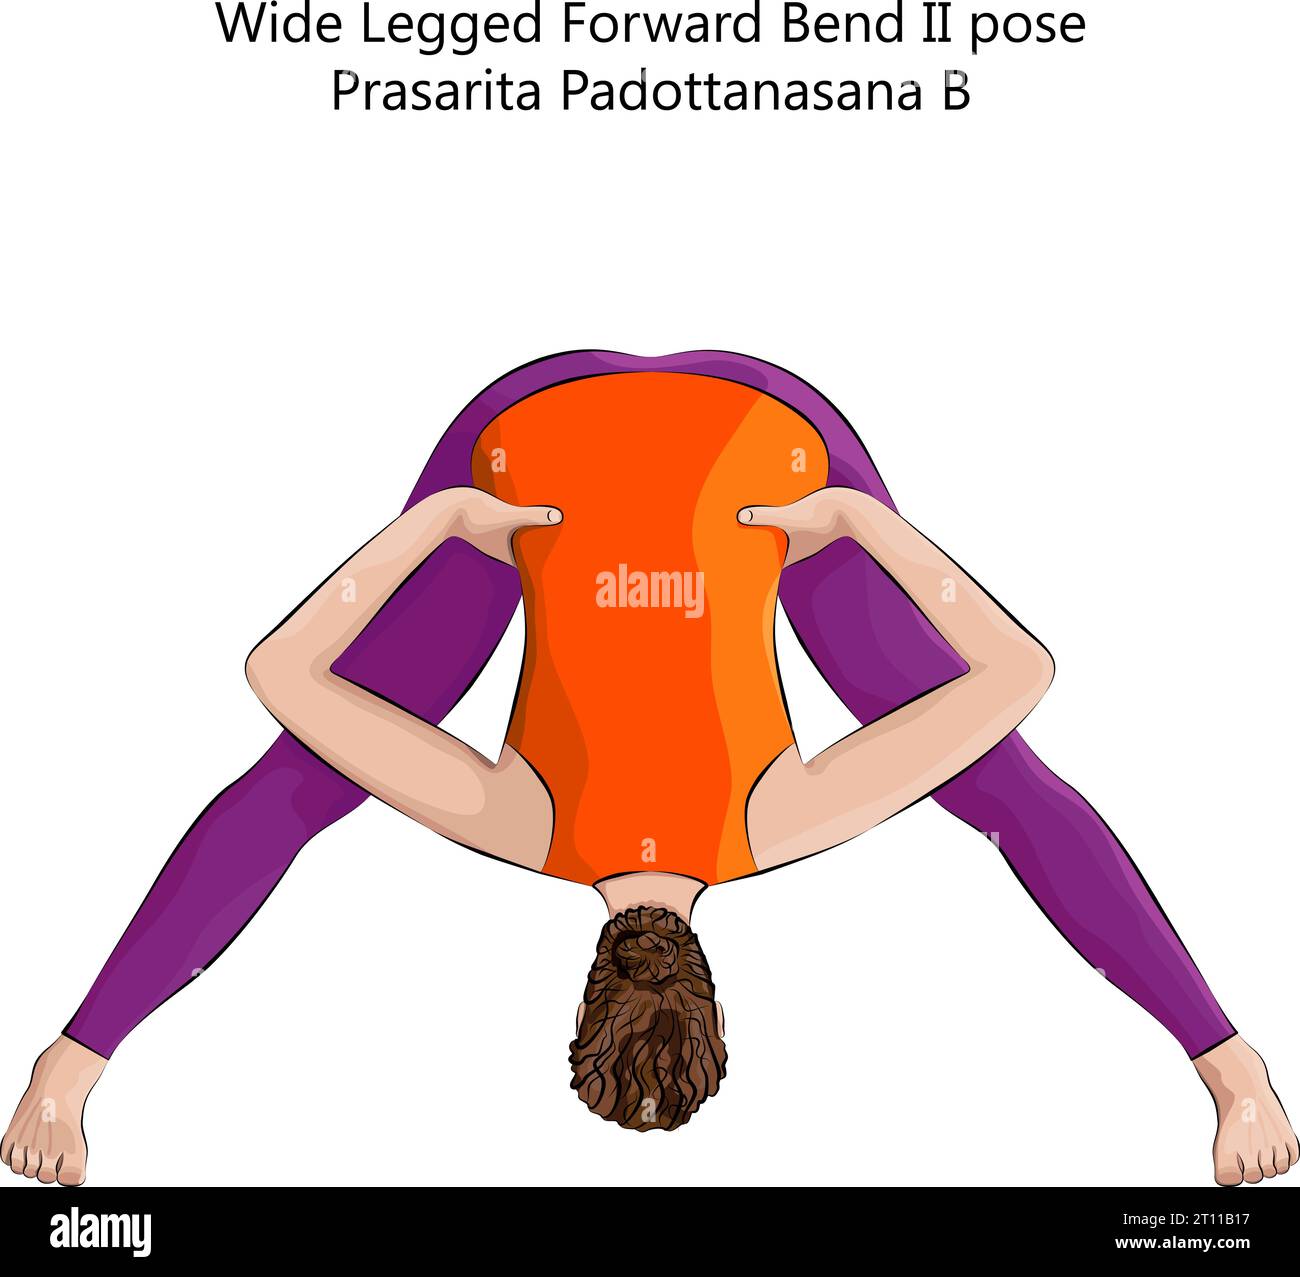 Wide-Legged Forward Bend: Prasarita Padottanasana